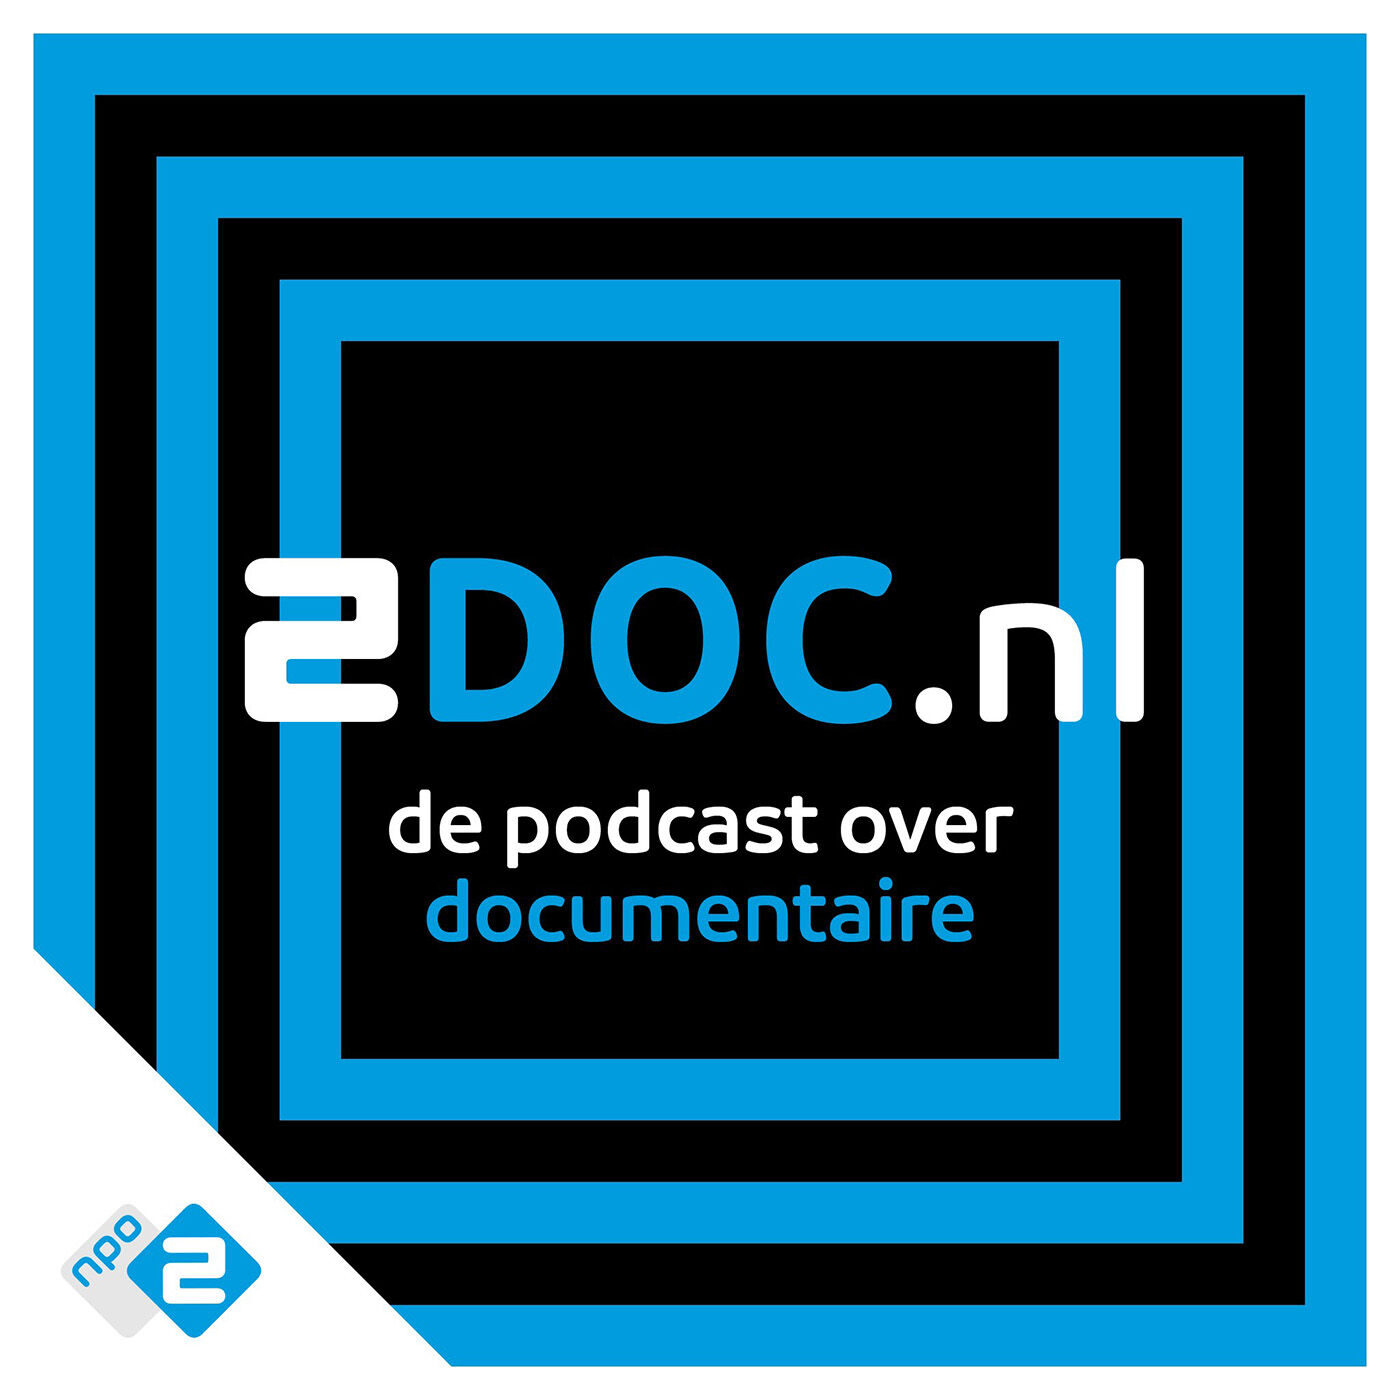 2Doc.nl - de podcast over documentaire podcast show image